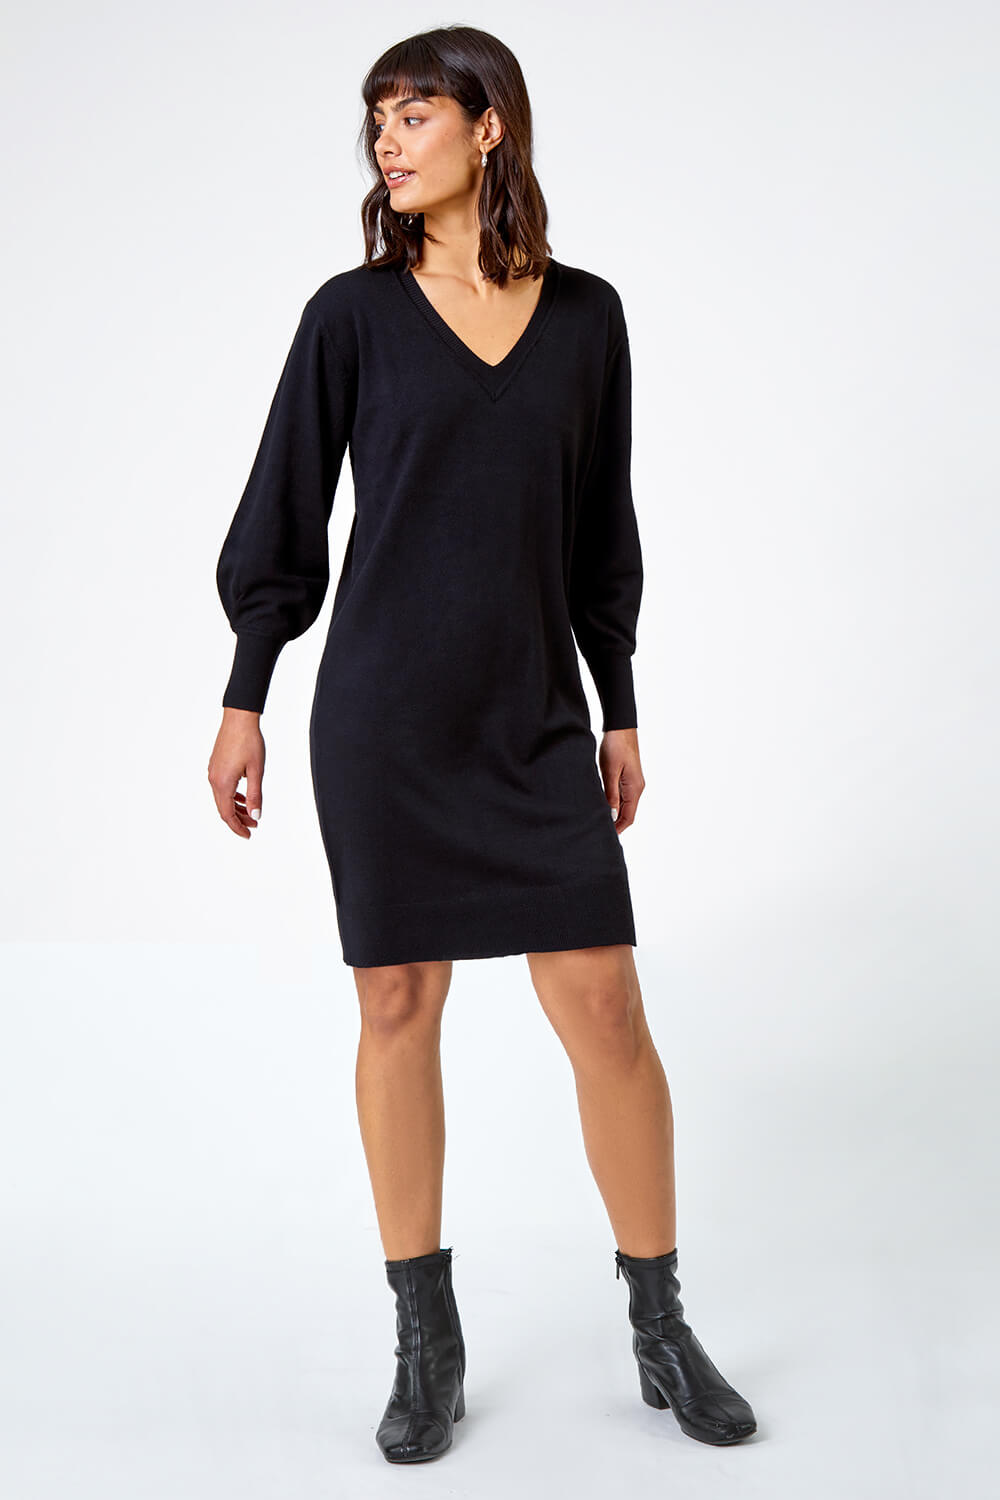 Black Longline Knitted Jumper Dress, Image 3 of 5